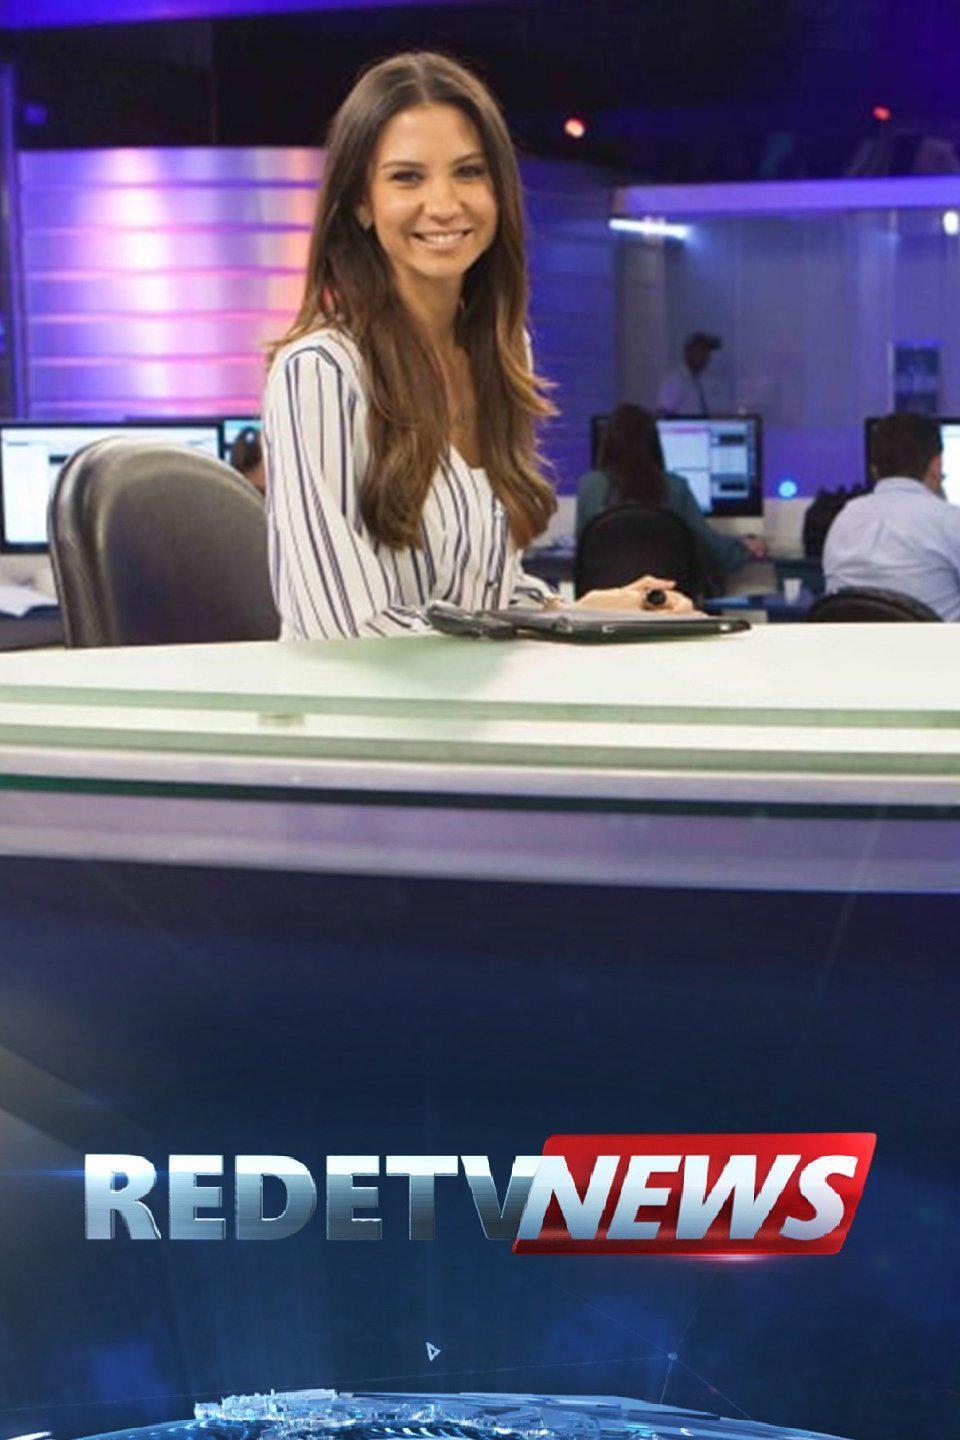 TV ratings for Redetv! News in the United Kingdom. RedeTV! TV series